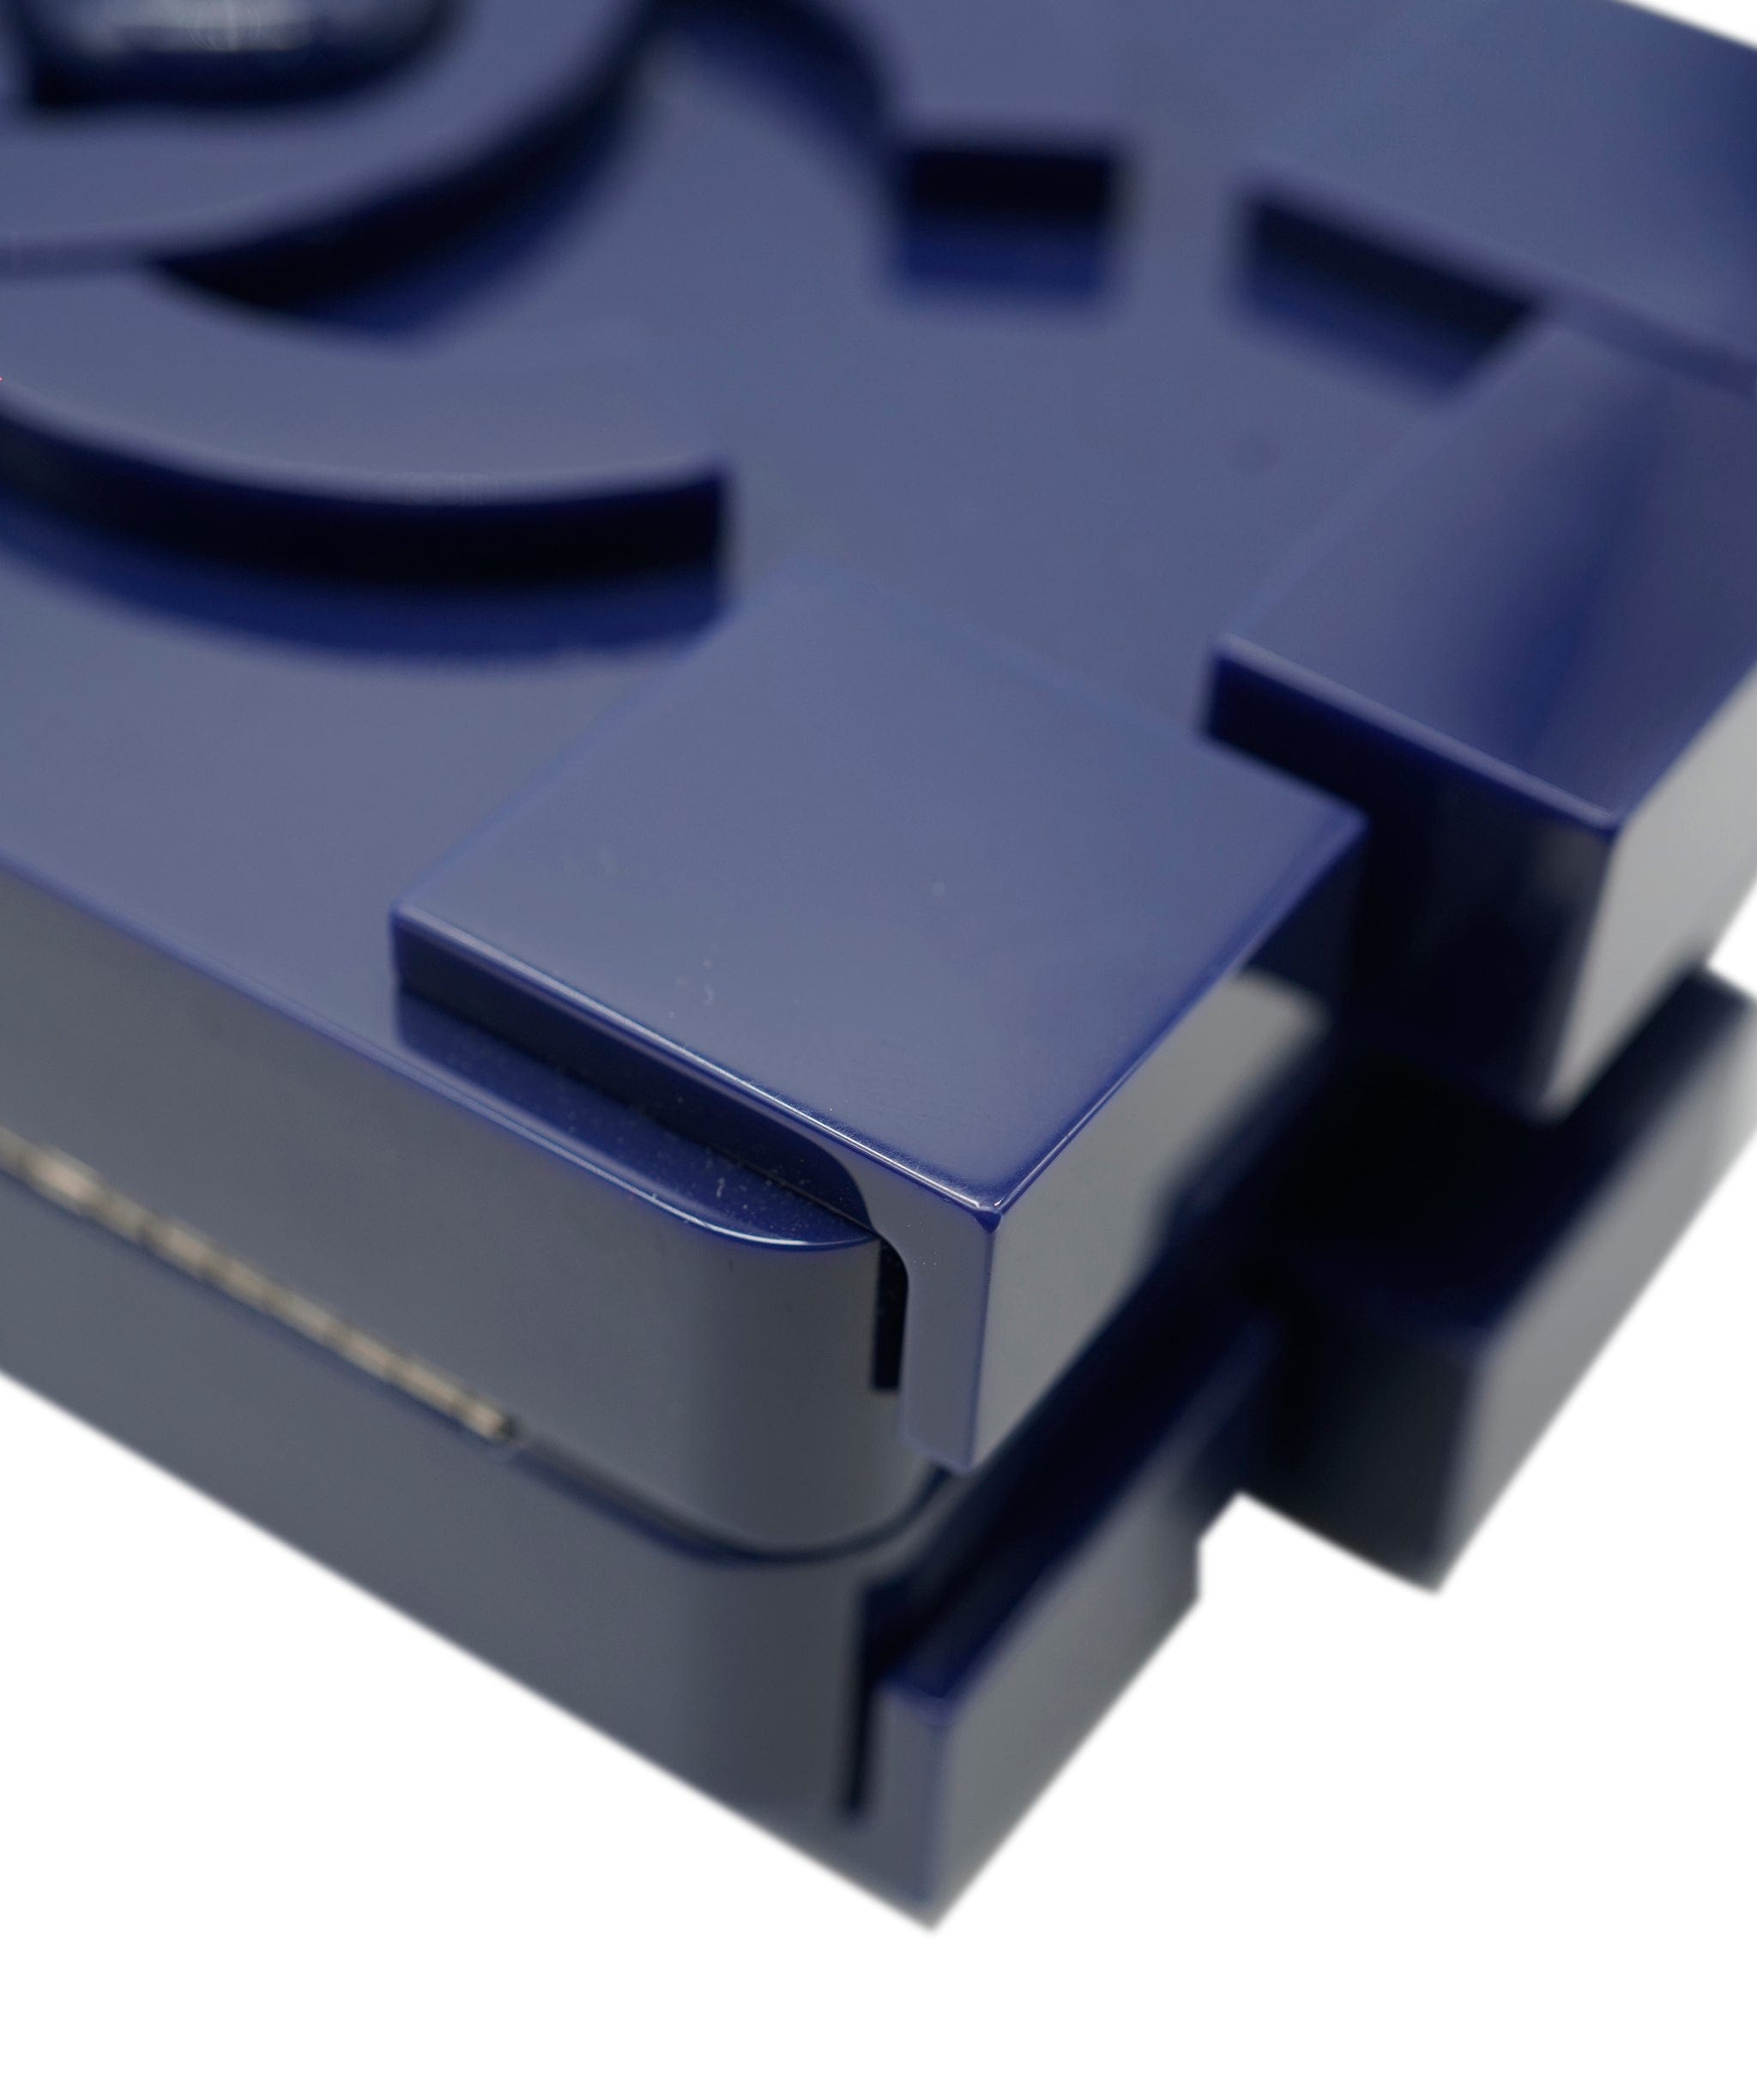 Chanel Chanel Navy Blue Plexiglass Boy Brick Lego Clutch AVL1444